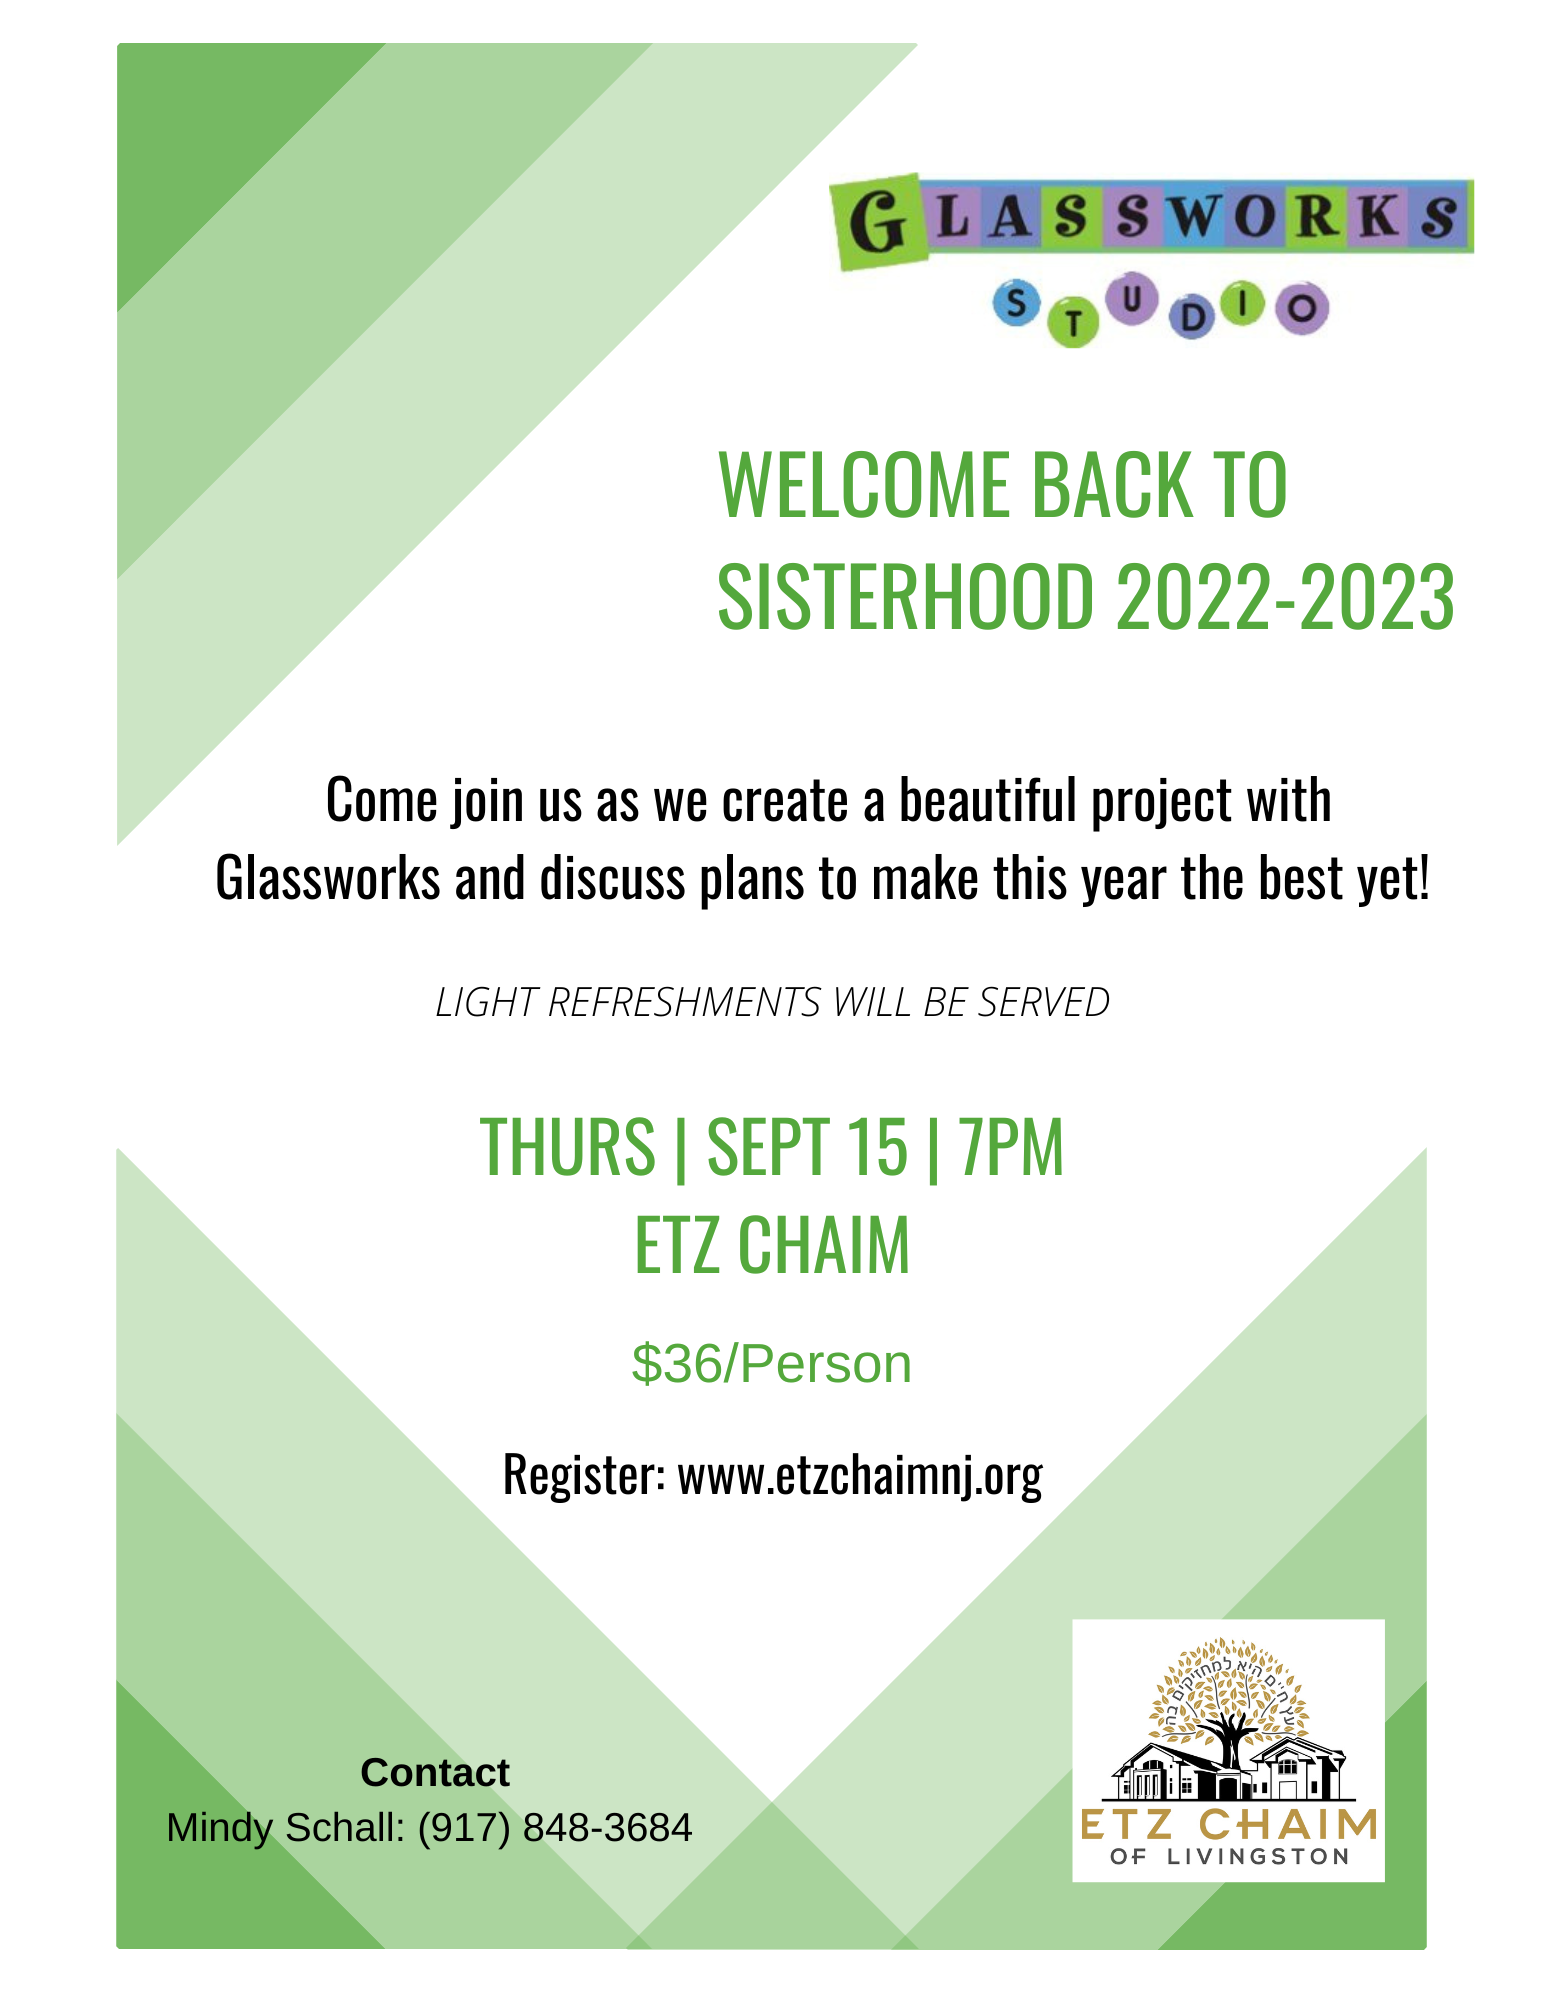 Welcome Back to Sisterhood 2022-2023: Glassworks Event